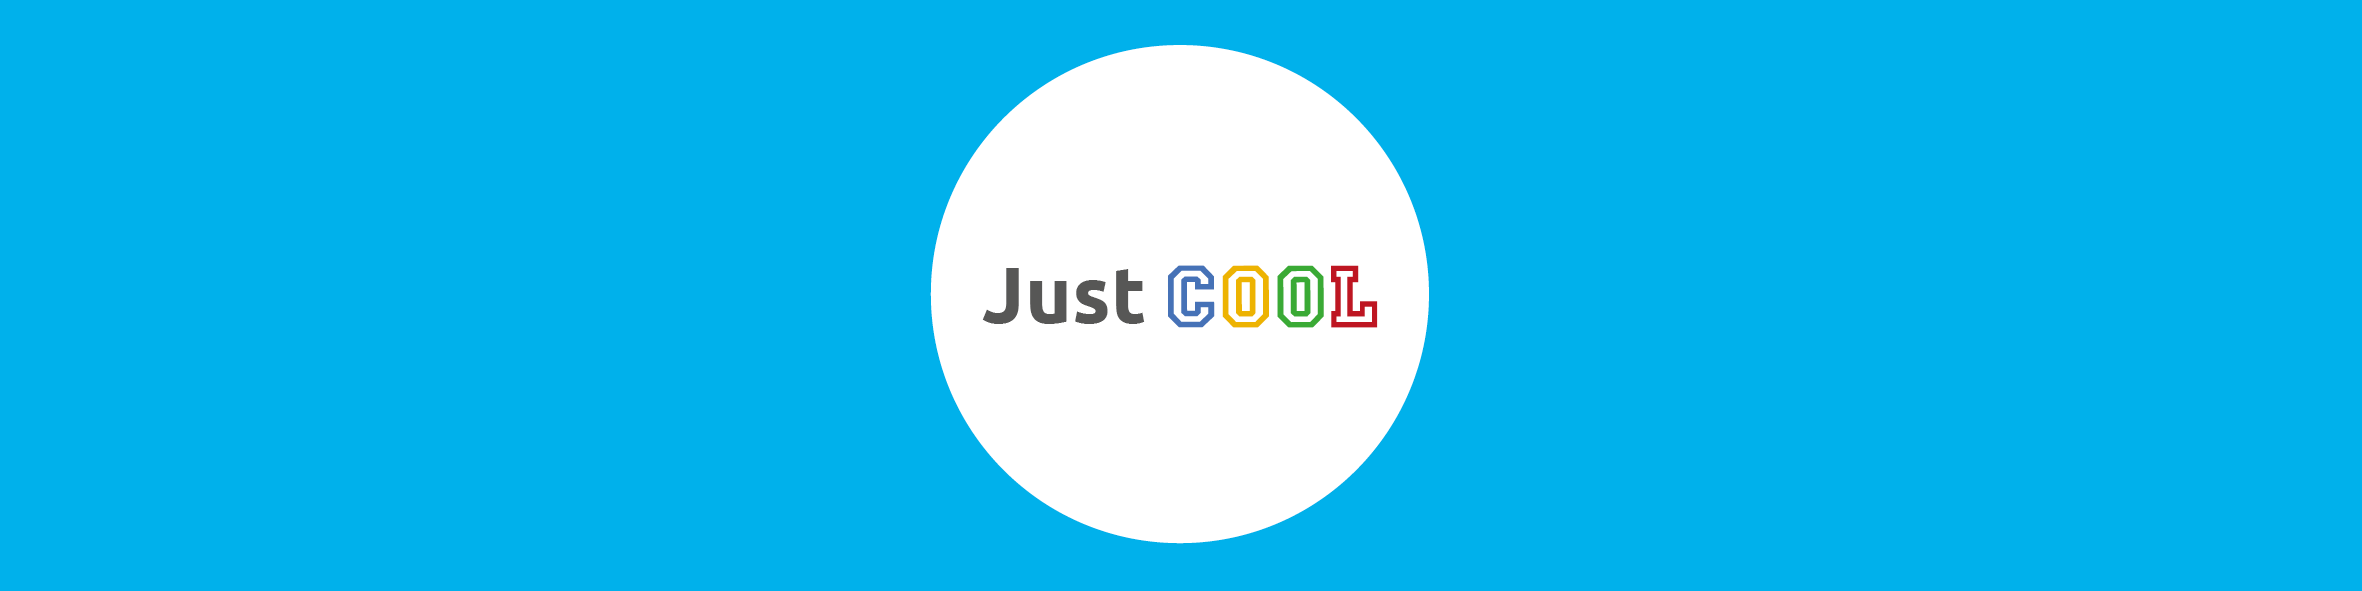 JustCOOL - Cloudwise Academy header trainingsaanbod